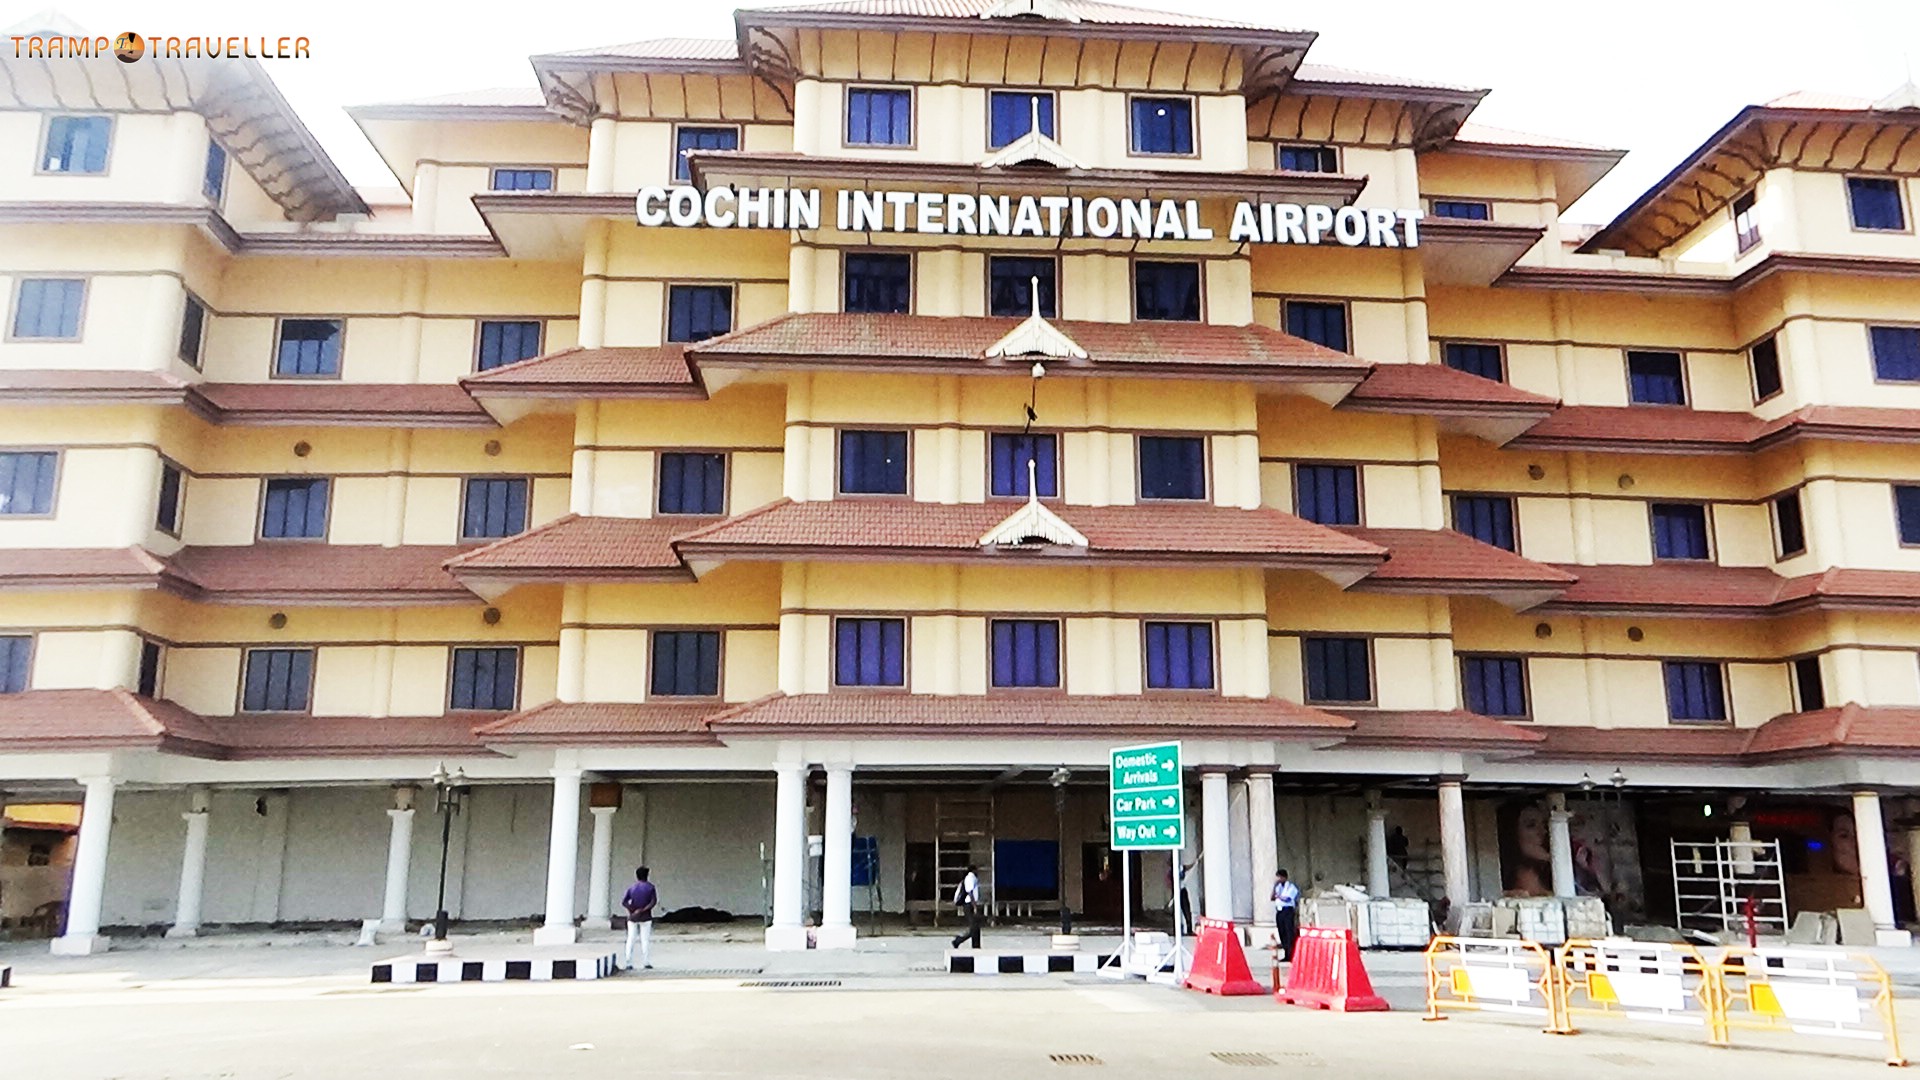 Cochin International Airport View